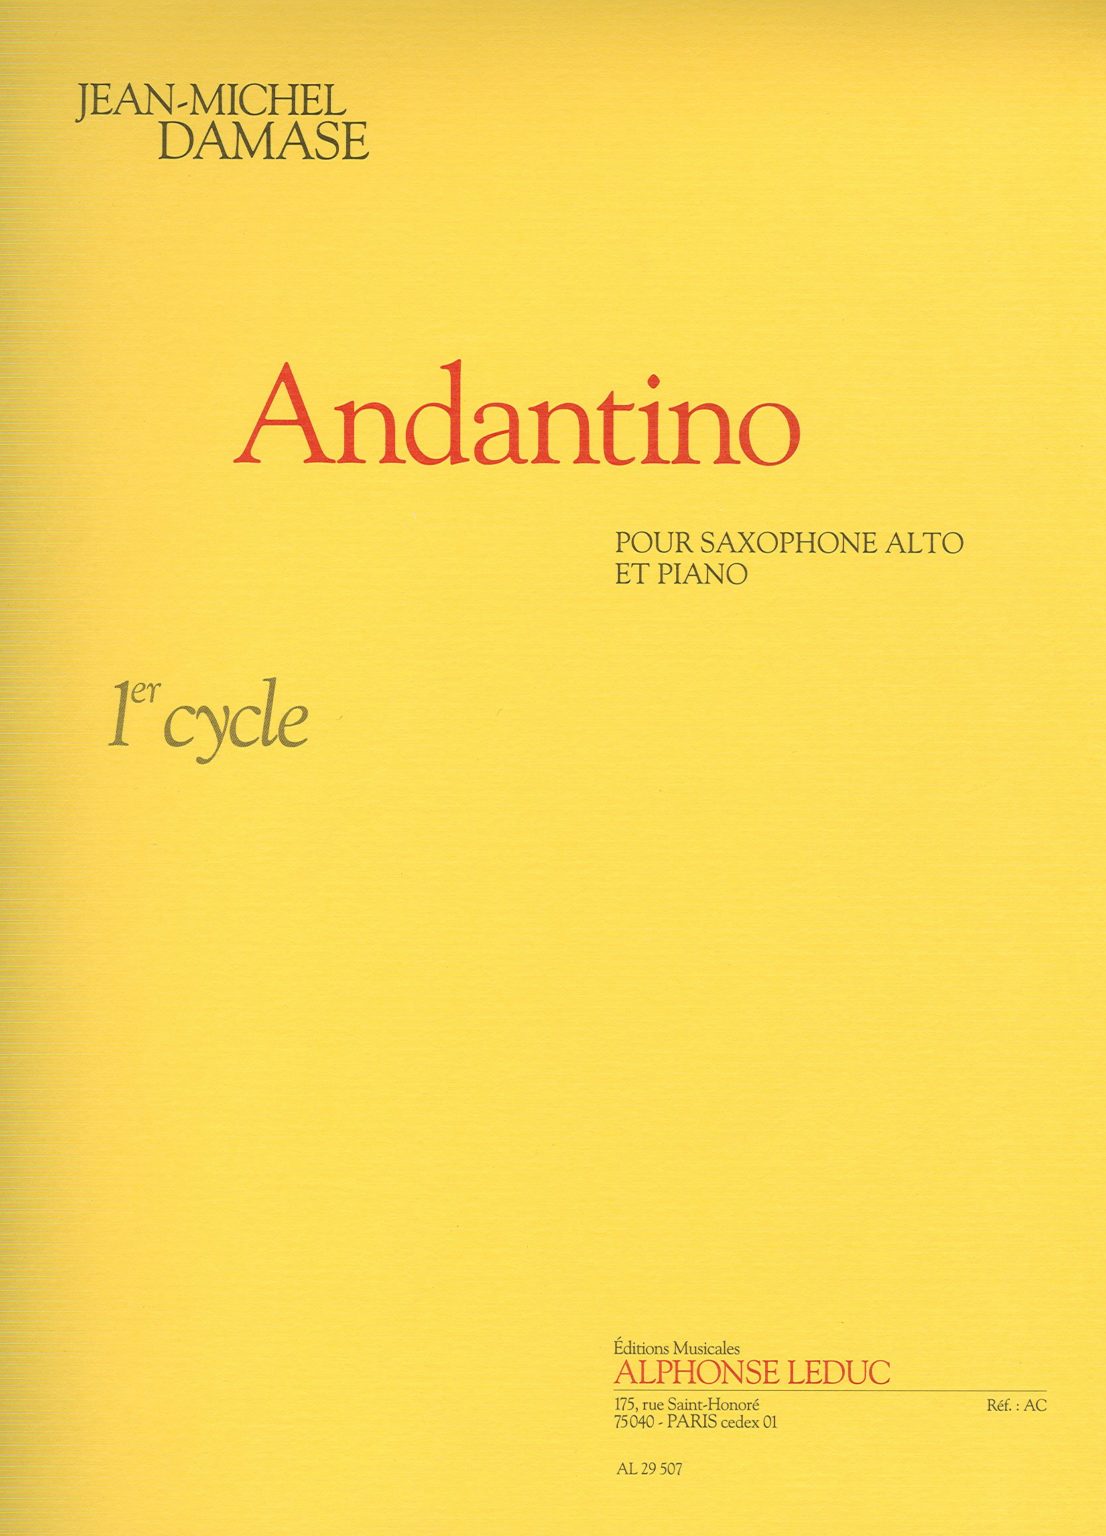 Andantino. Jean-Michel Damase